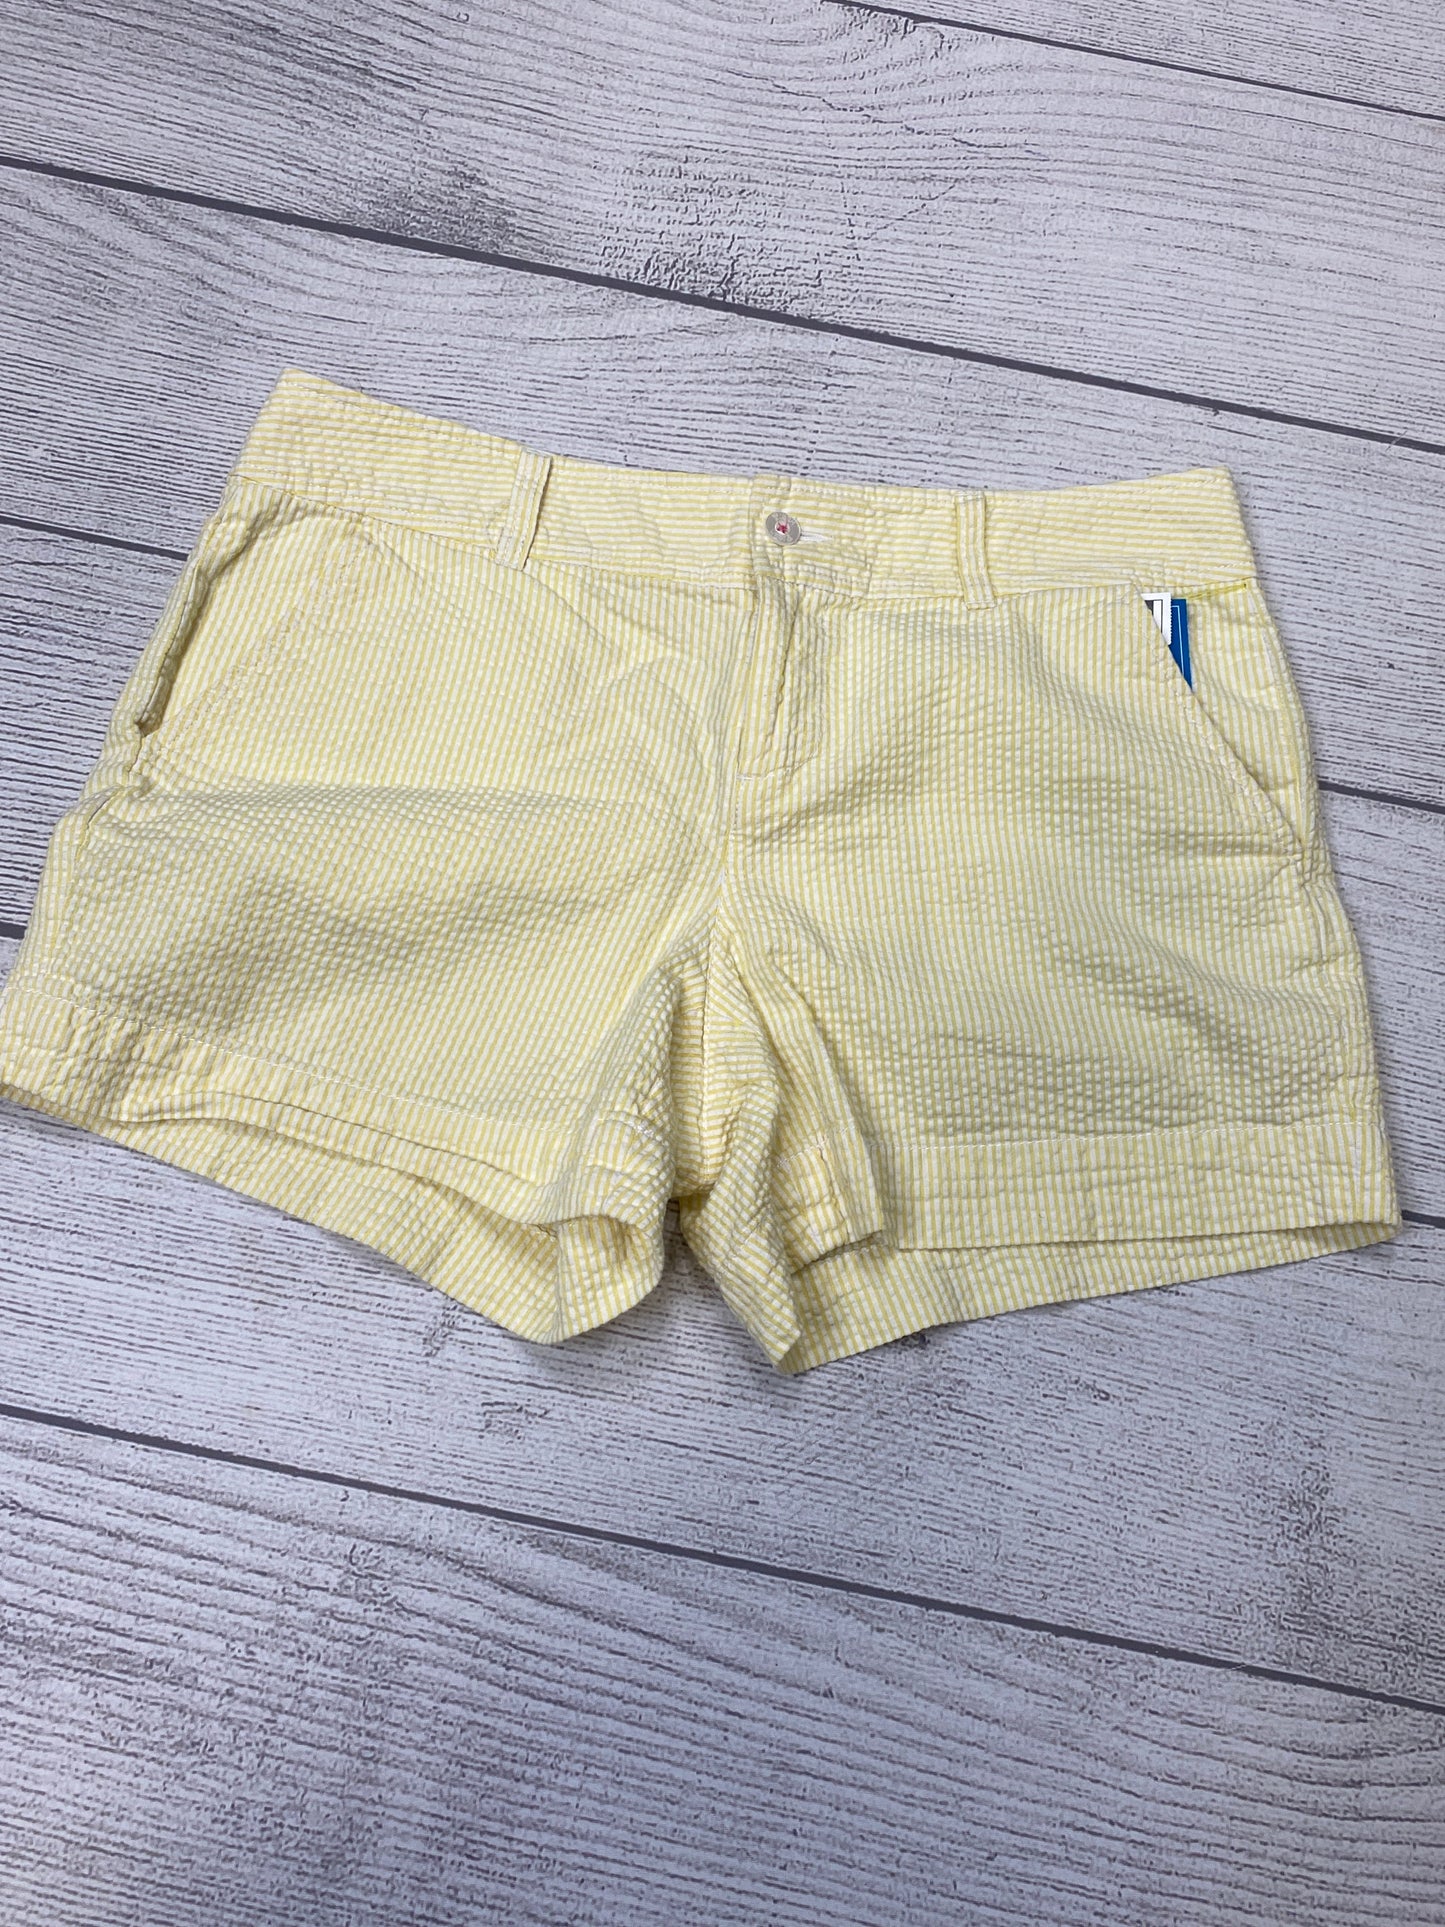 Yellow Shorts Lilly Pulitzer, Size 6